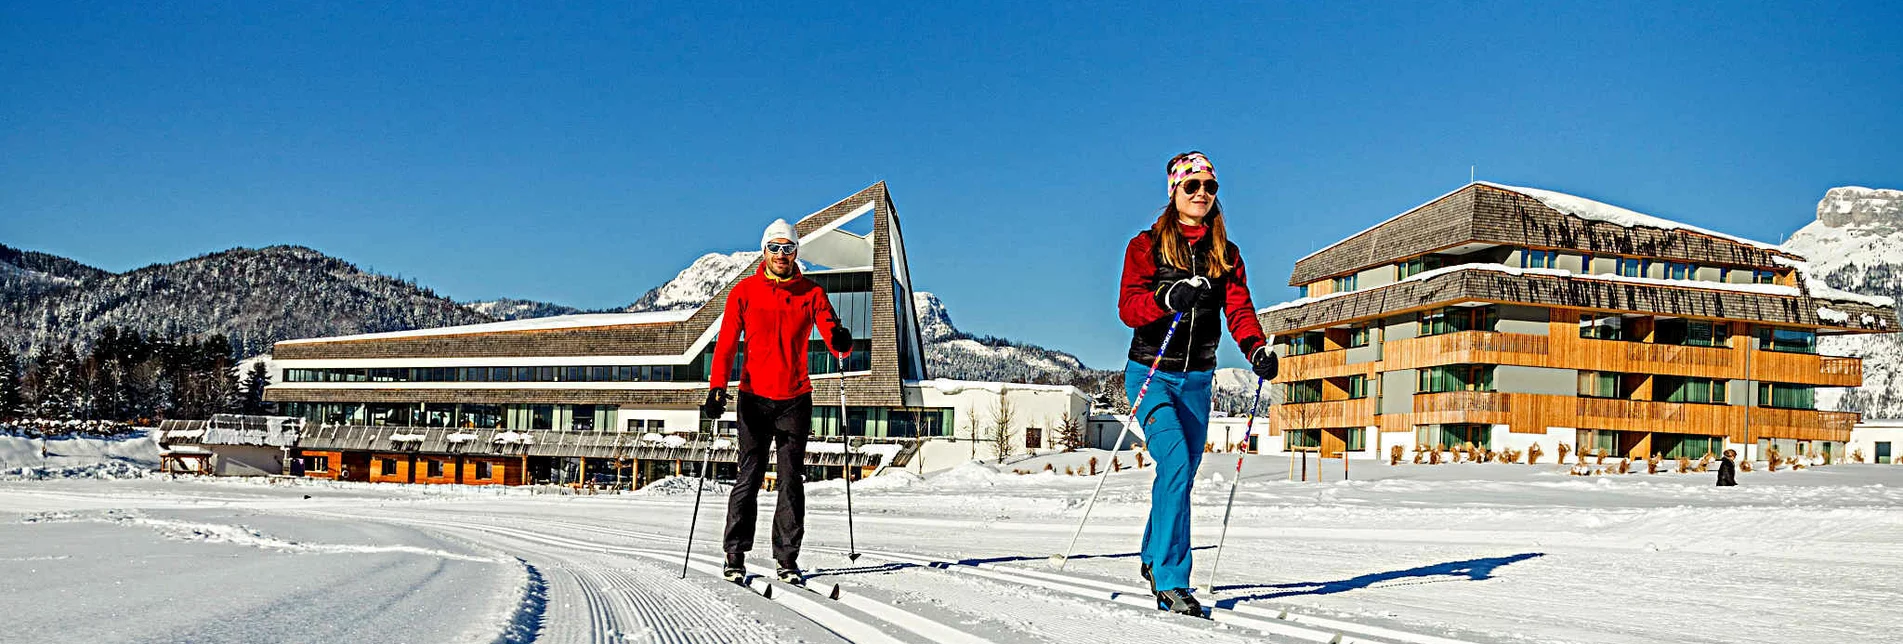 Ski-nordic-classic Panorama-Loipe - Touren-Impression #1 | © Narzissenhotel/T. Kujat